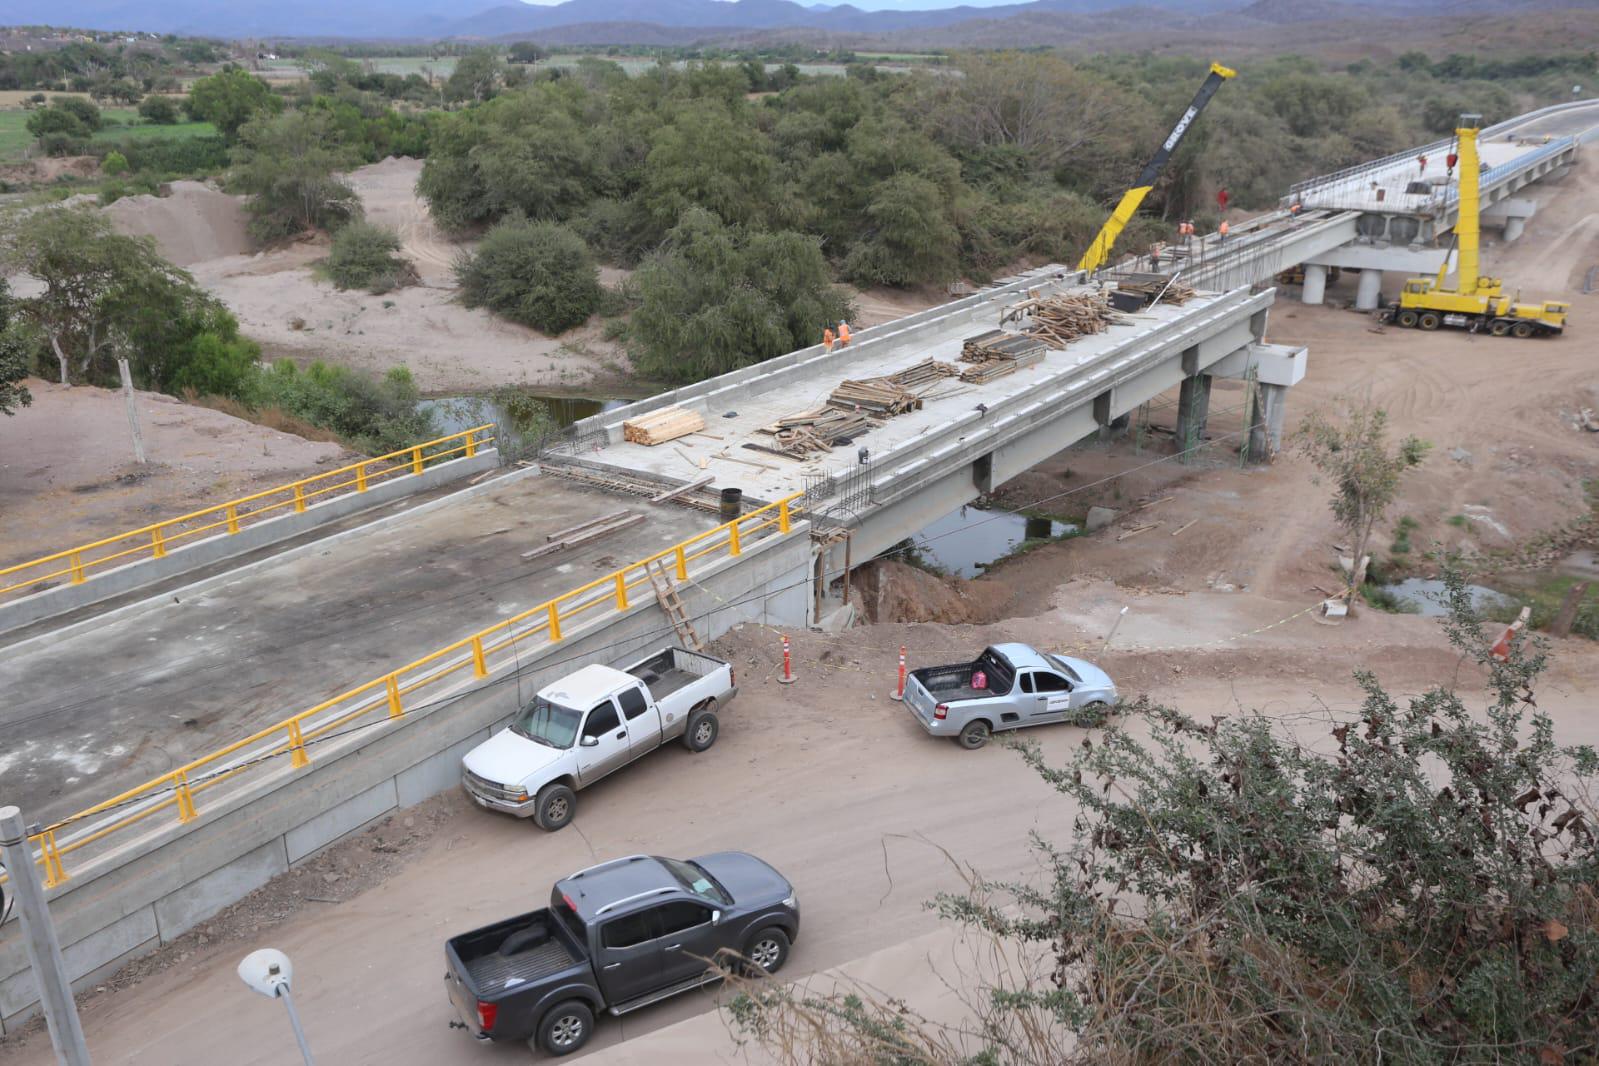 $!Se prevé que venga López Obrador a inaugurar el puente de El Quelite en abril: Alcalde